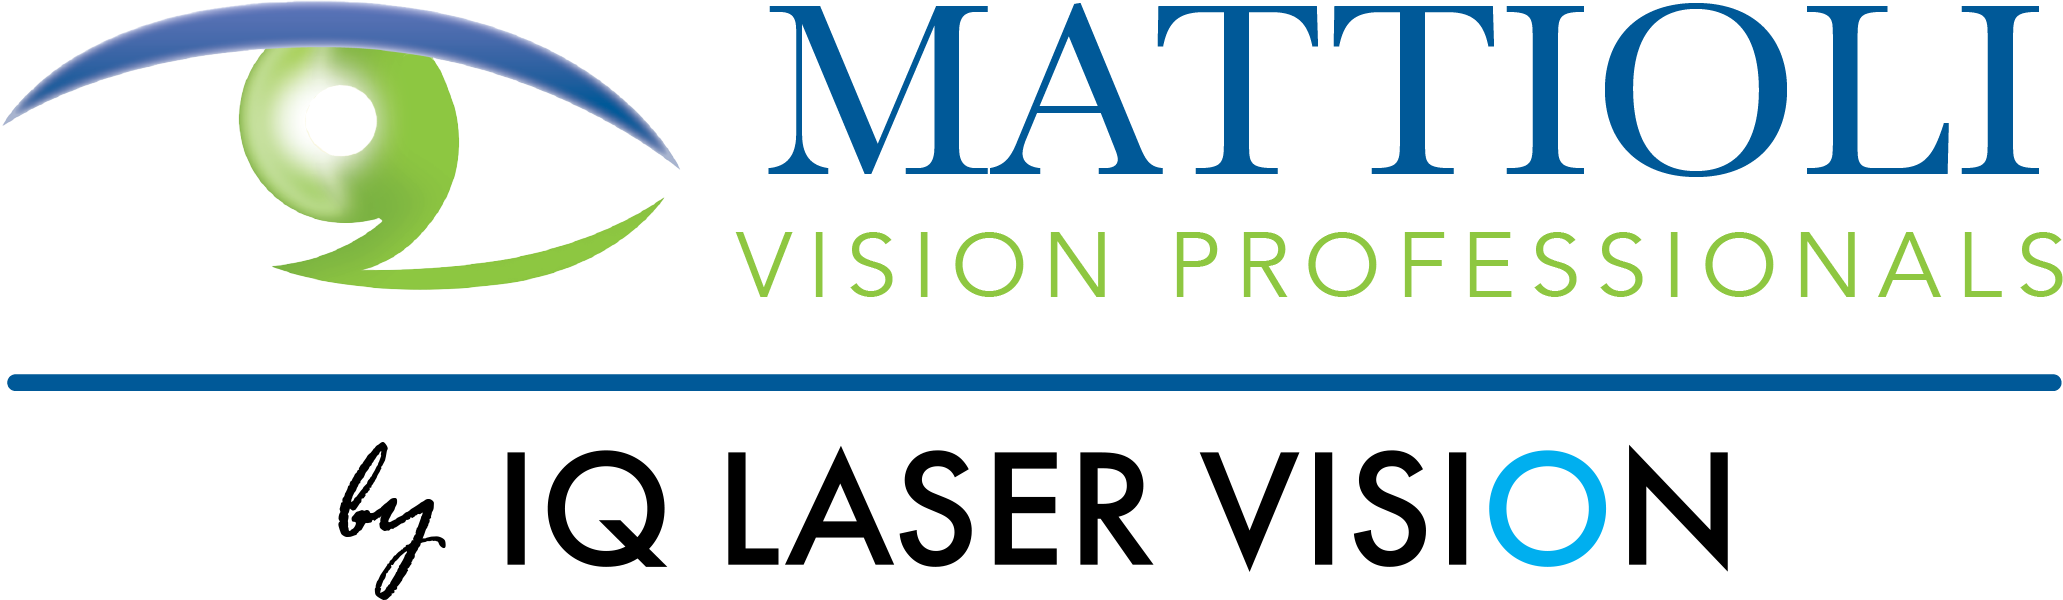 Mattiolli Vision Professionals, logo